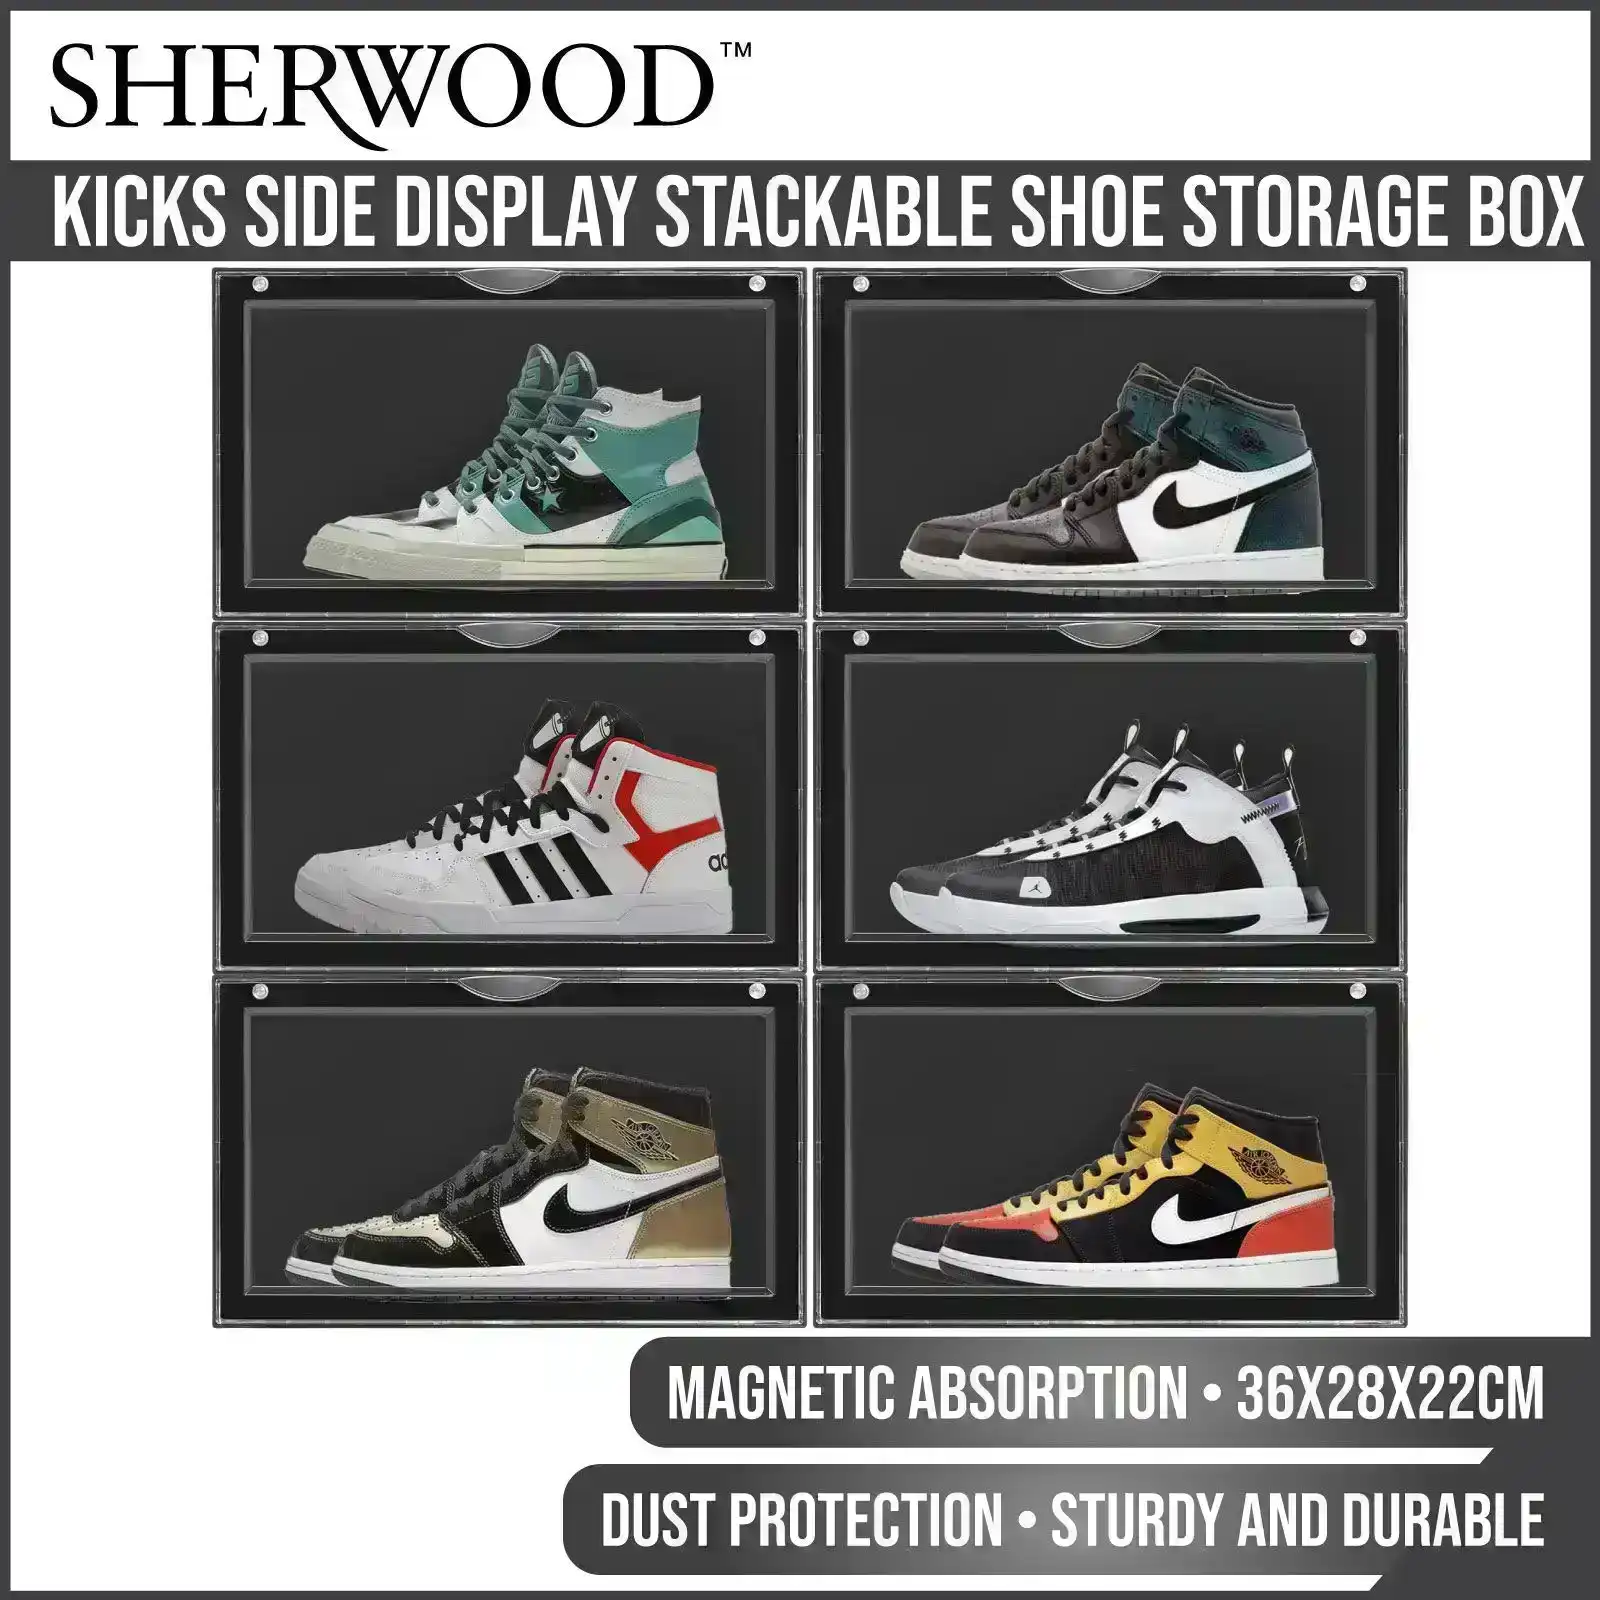 Sherwood Kicks Side Display Stackable Shoe Storage Box Black - 6 Pack